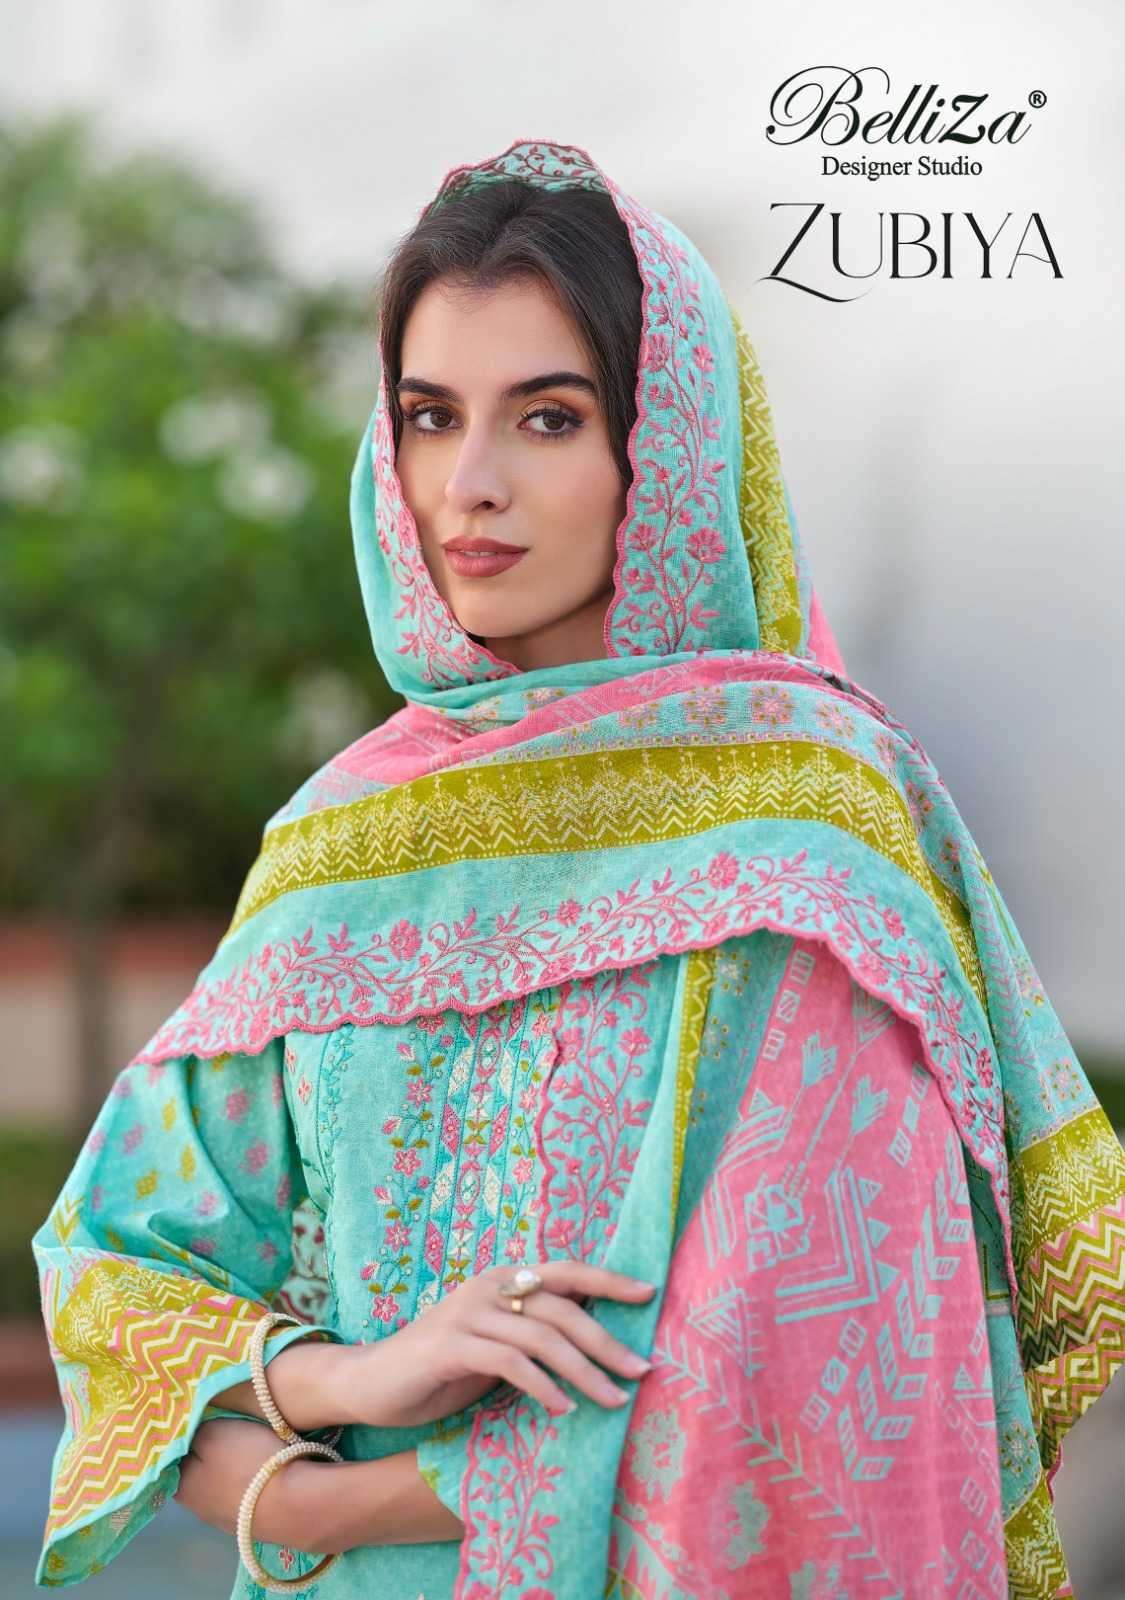 belliza zubiya series 923001-923008 Pure Cotton Digital Prints suit